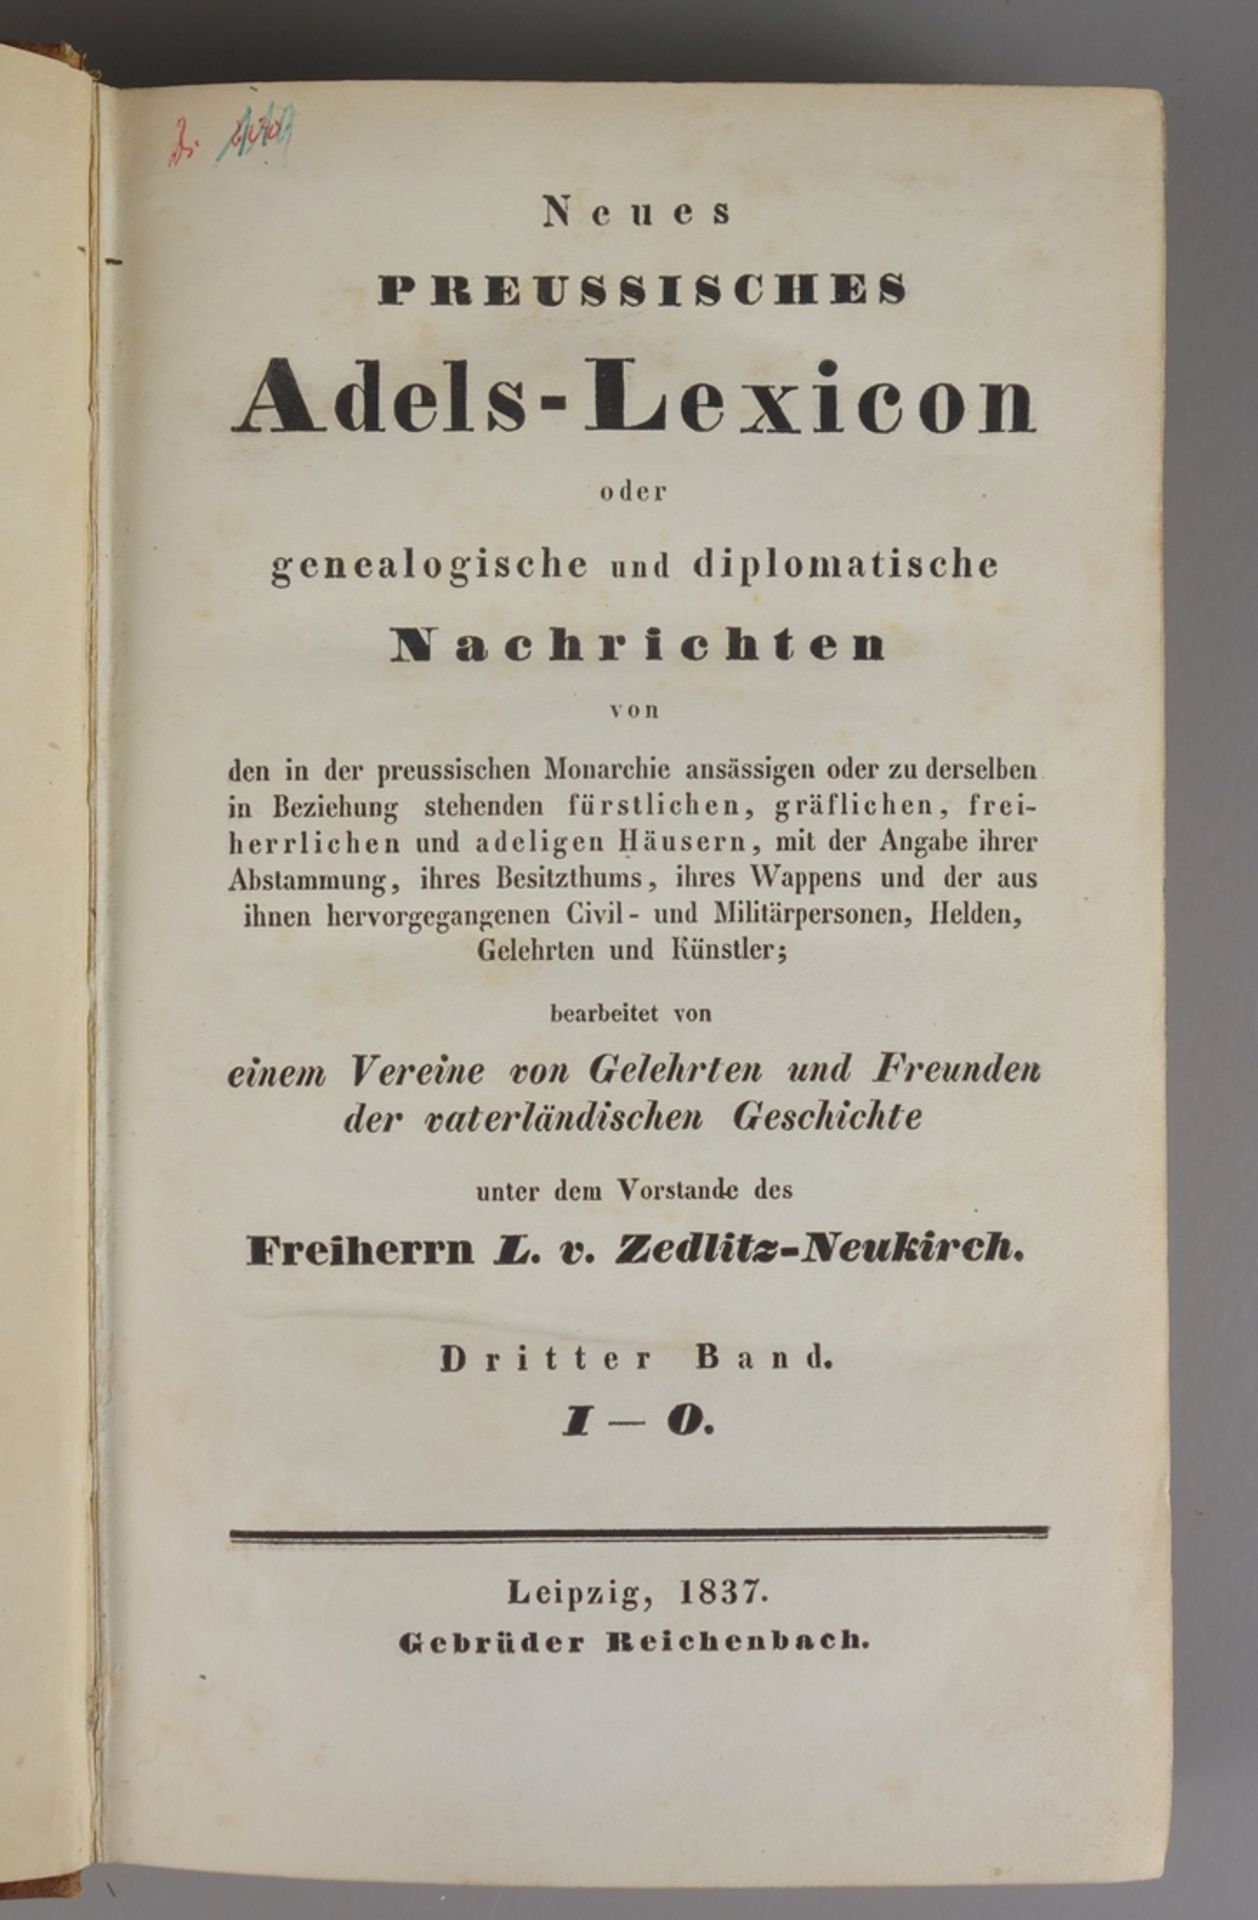 Neues Preussisches Adels-Lexicon, Dritter Band I-O, 1837, Leipzig, Gebrüder Rei